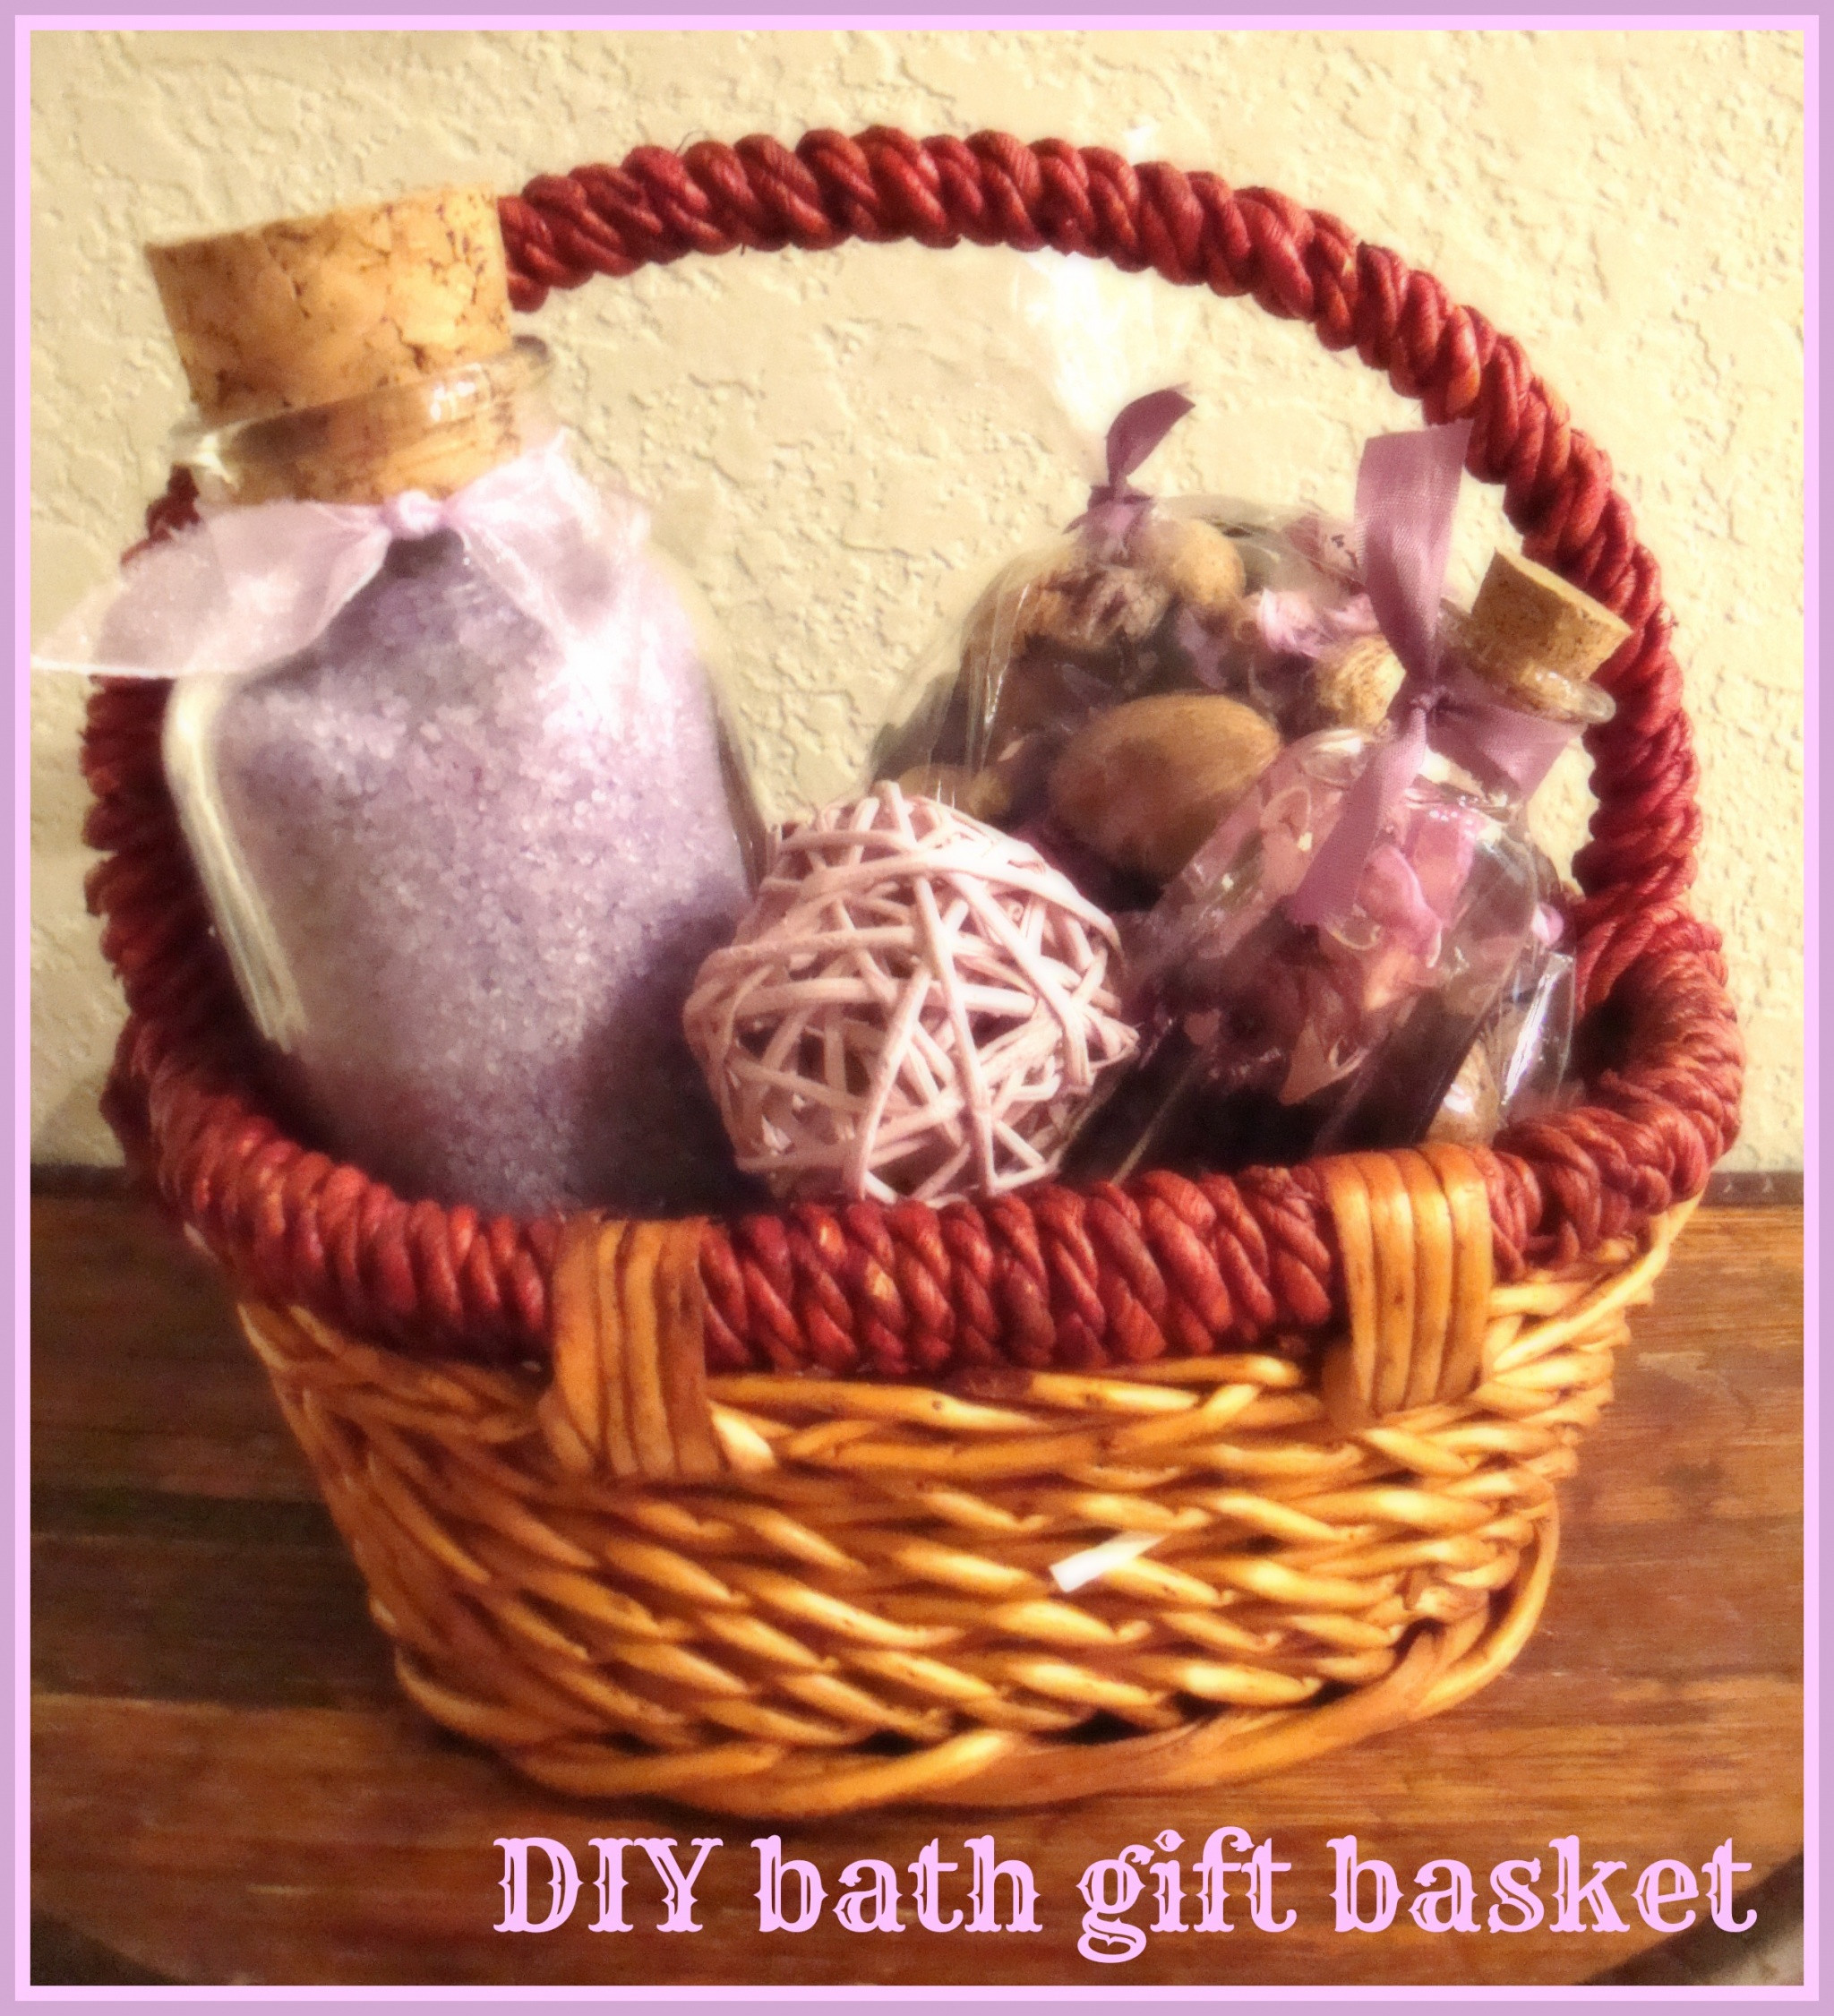 DIY Bath Gift Basket
 Homemade Scented Bath Oil & Bath Salts Growing Up Bilingual